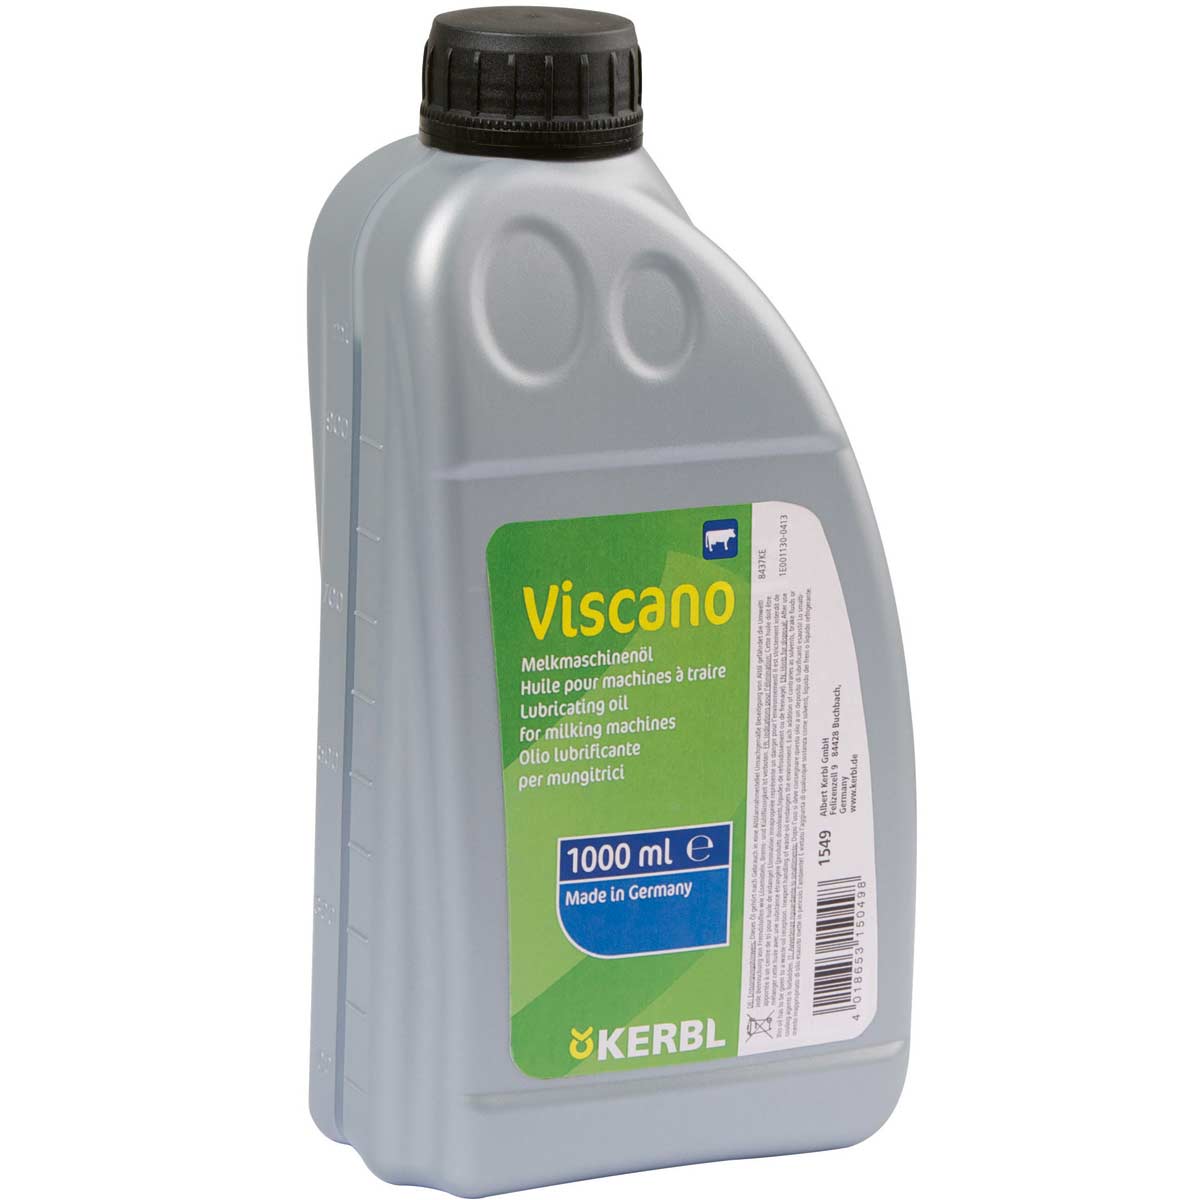 Viscano lube oil for milking machines